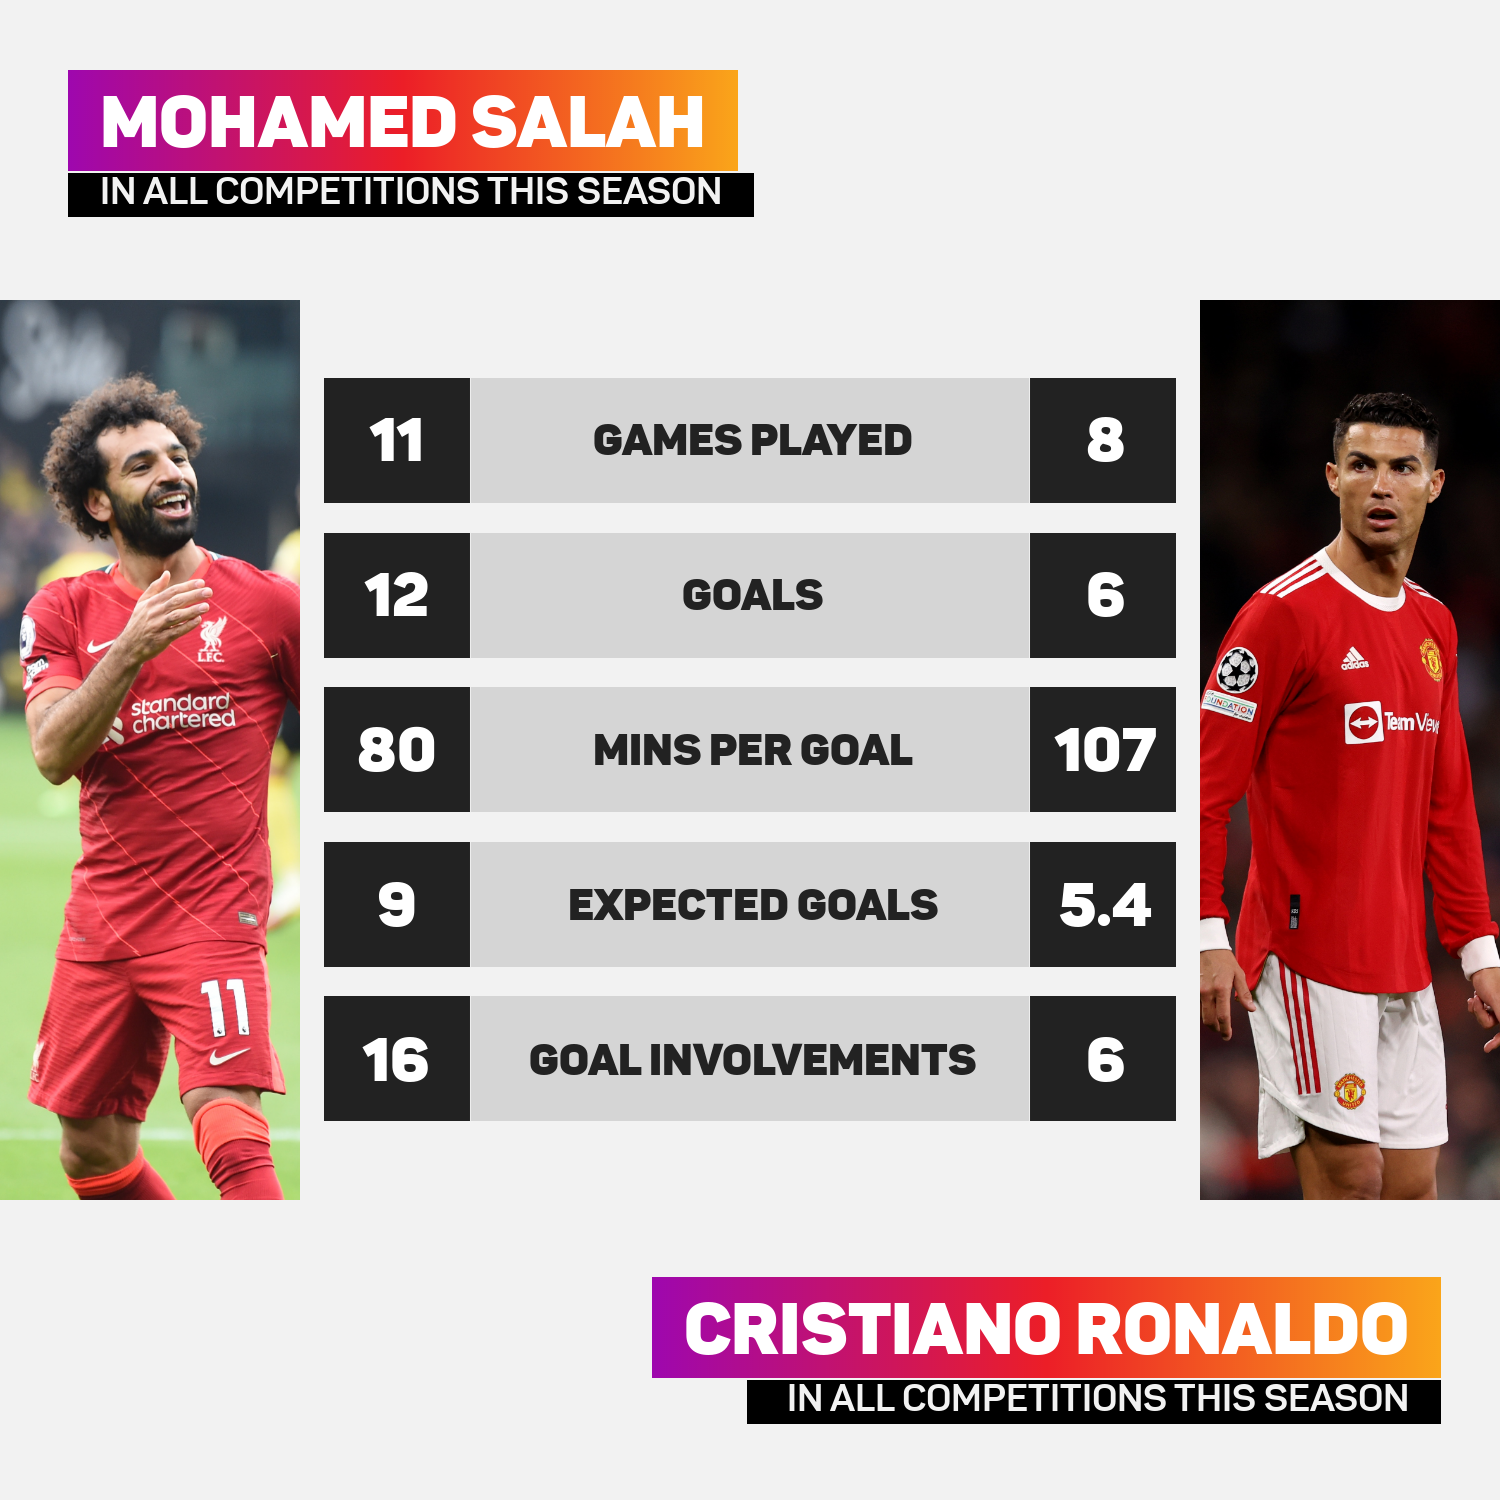 Mohamed Salah and Cristiano Ronaldo